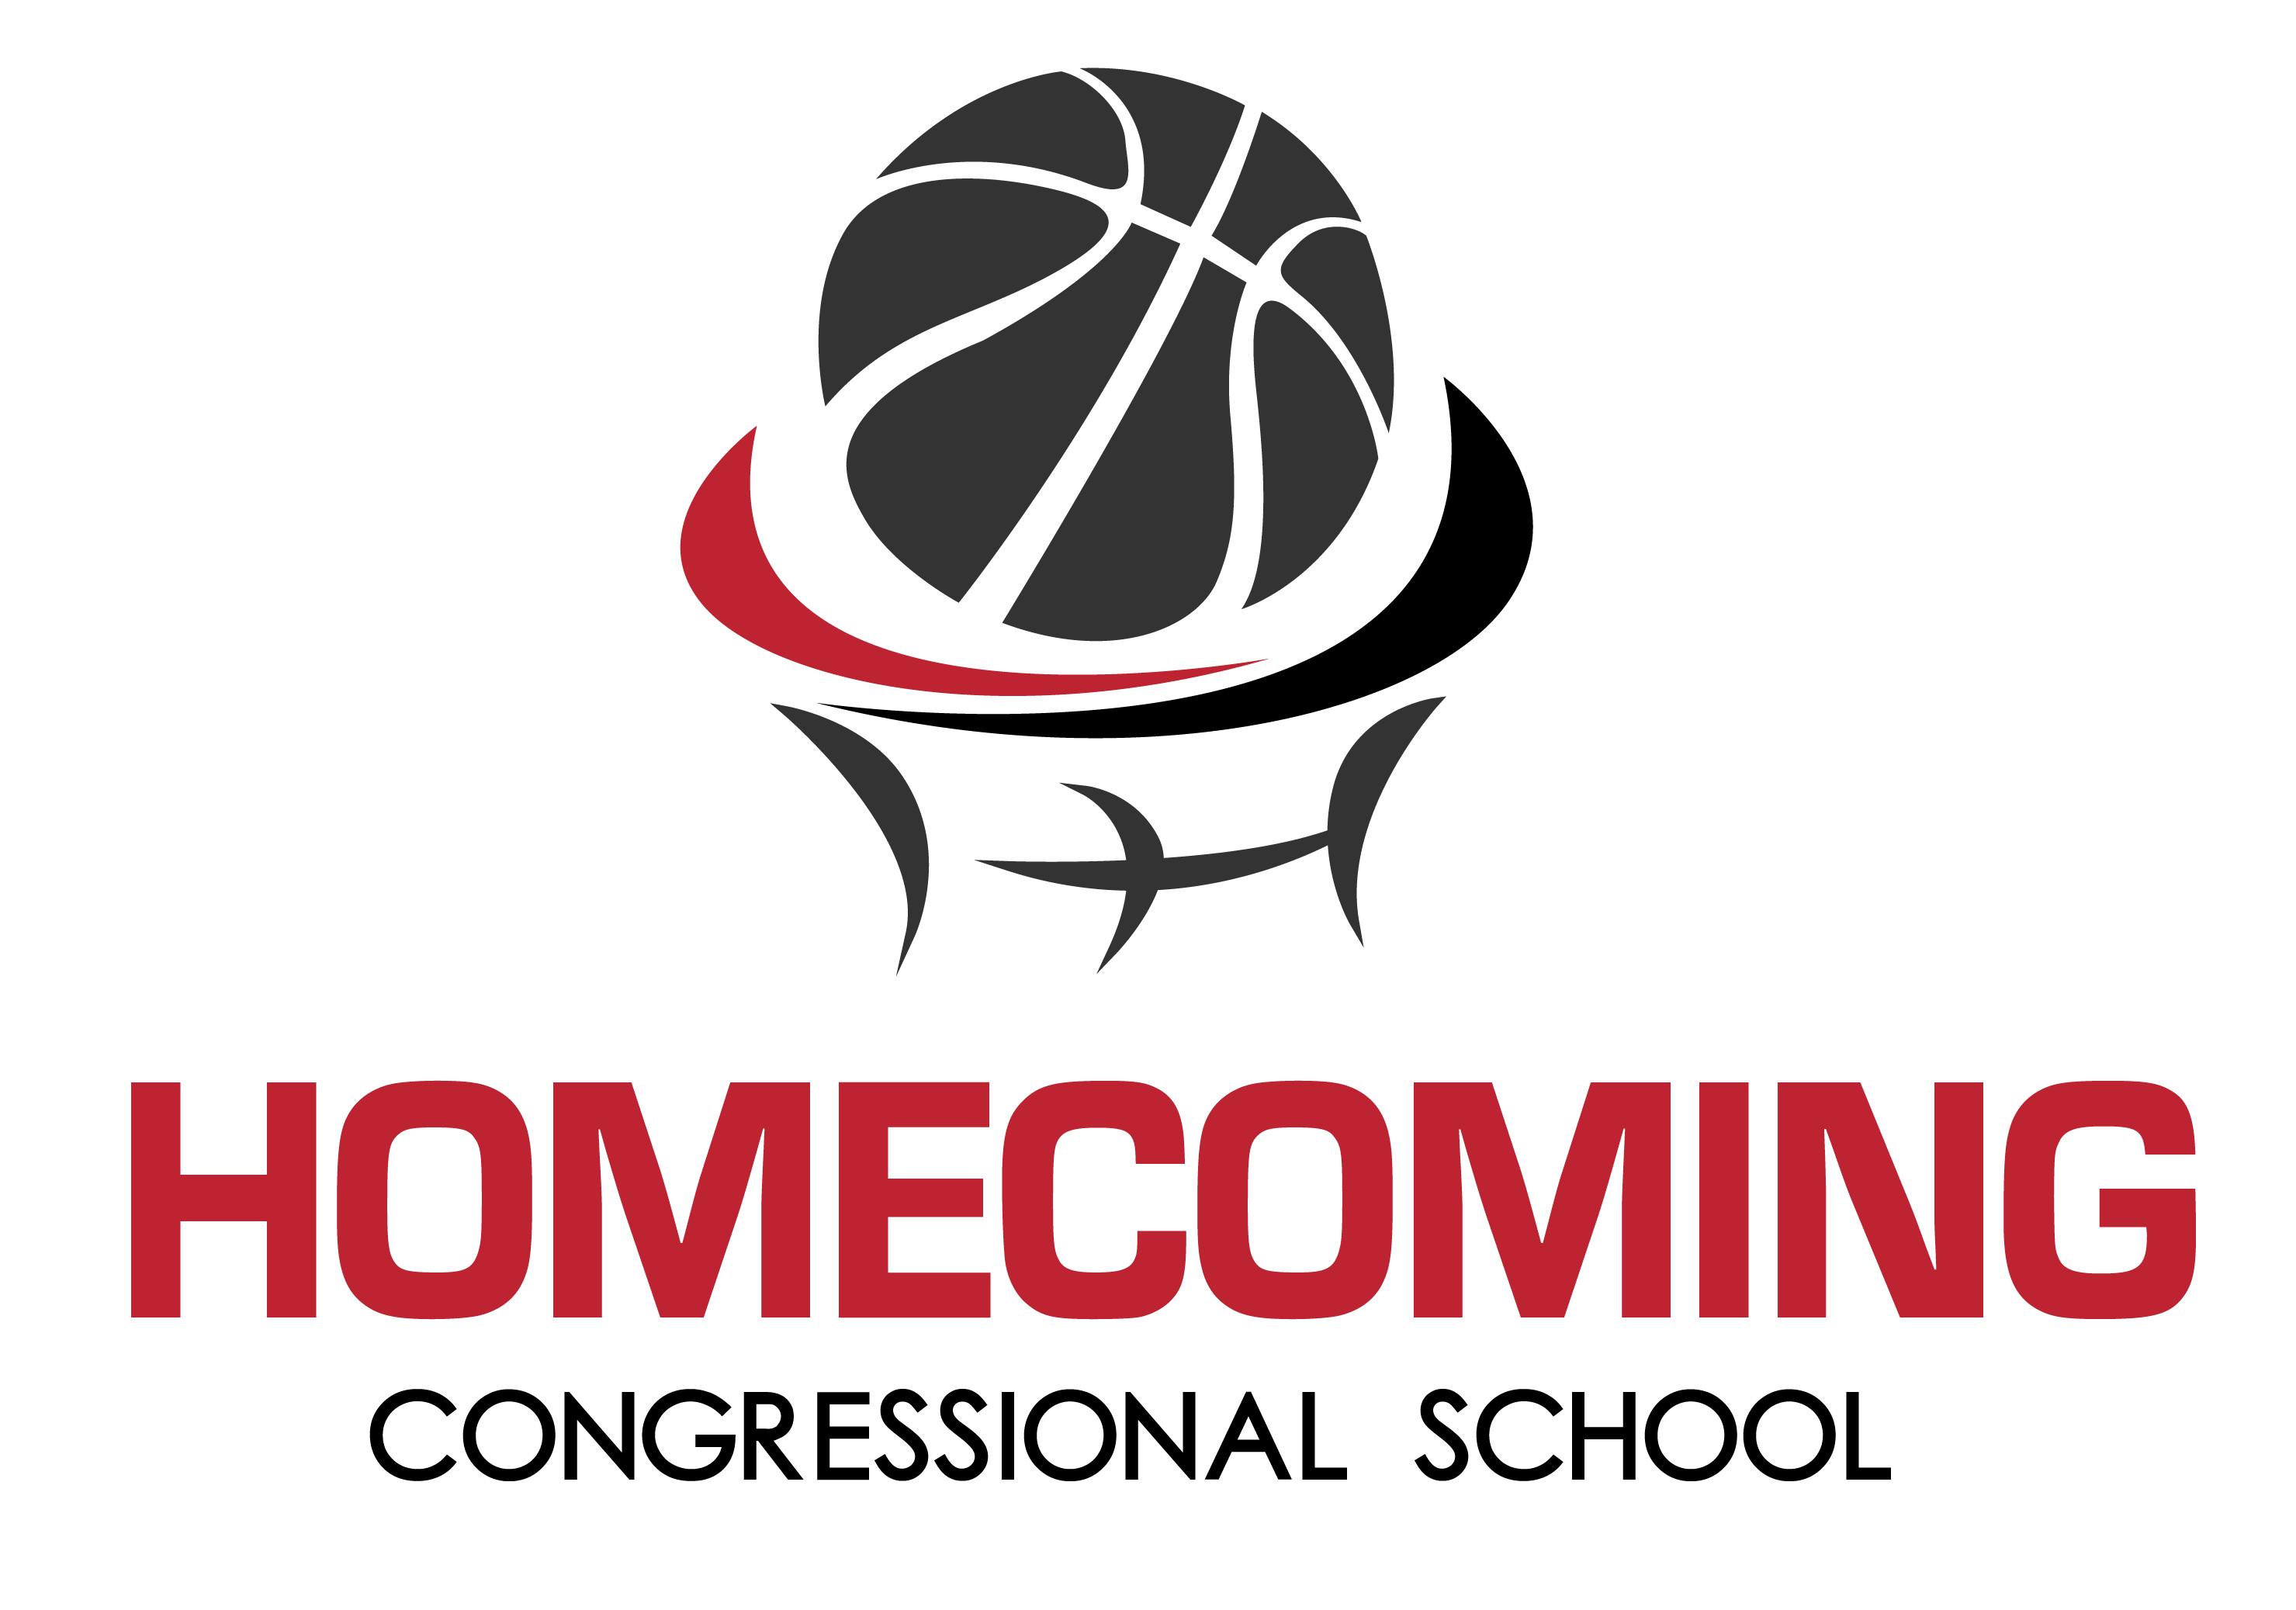 2018 Logo - Homecoming 2018 Logo 01